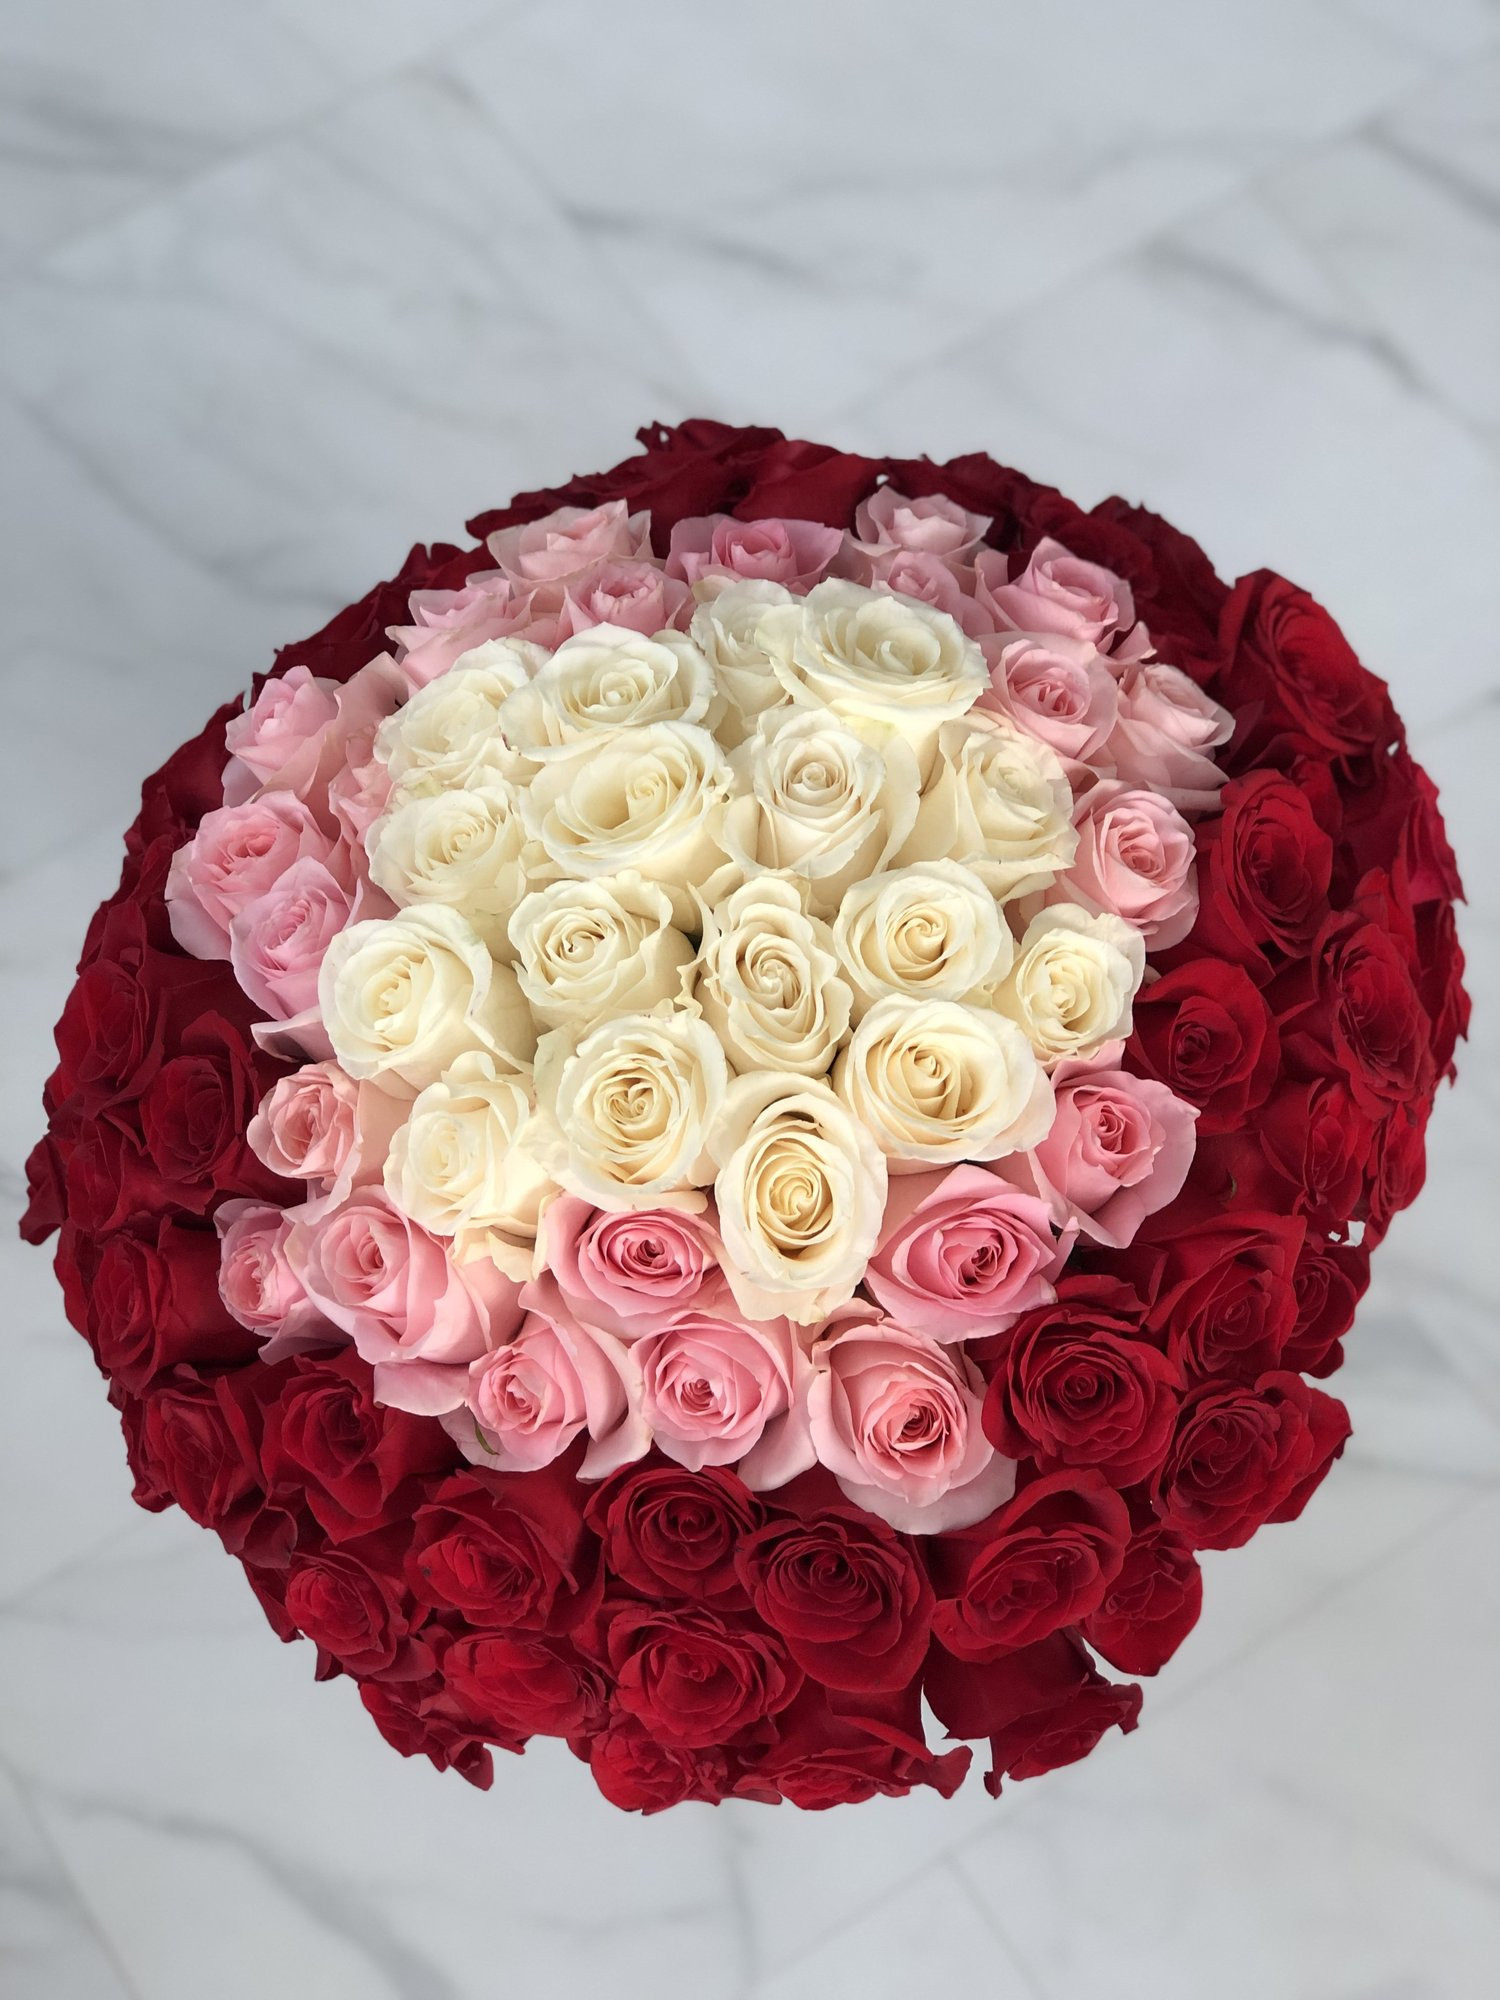 100 rose bouquets image113